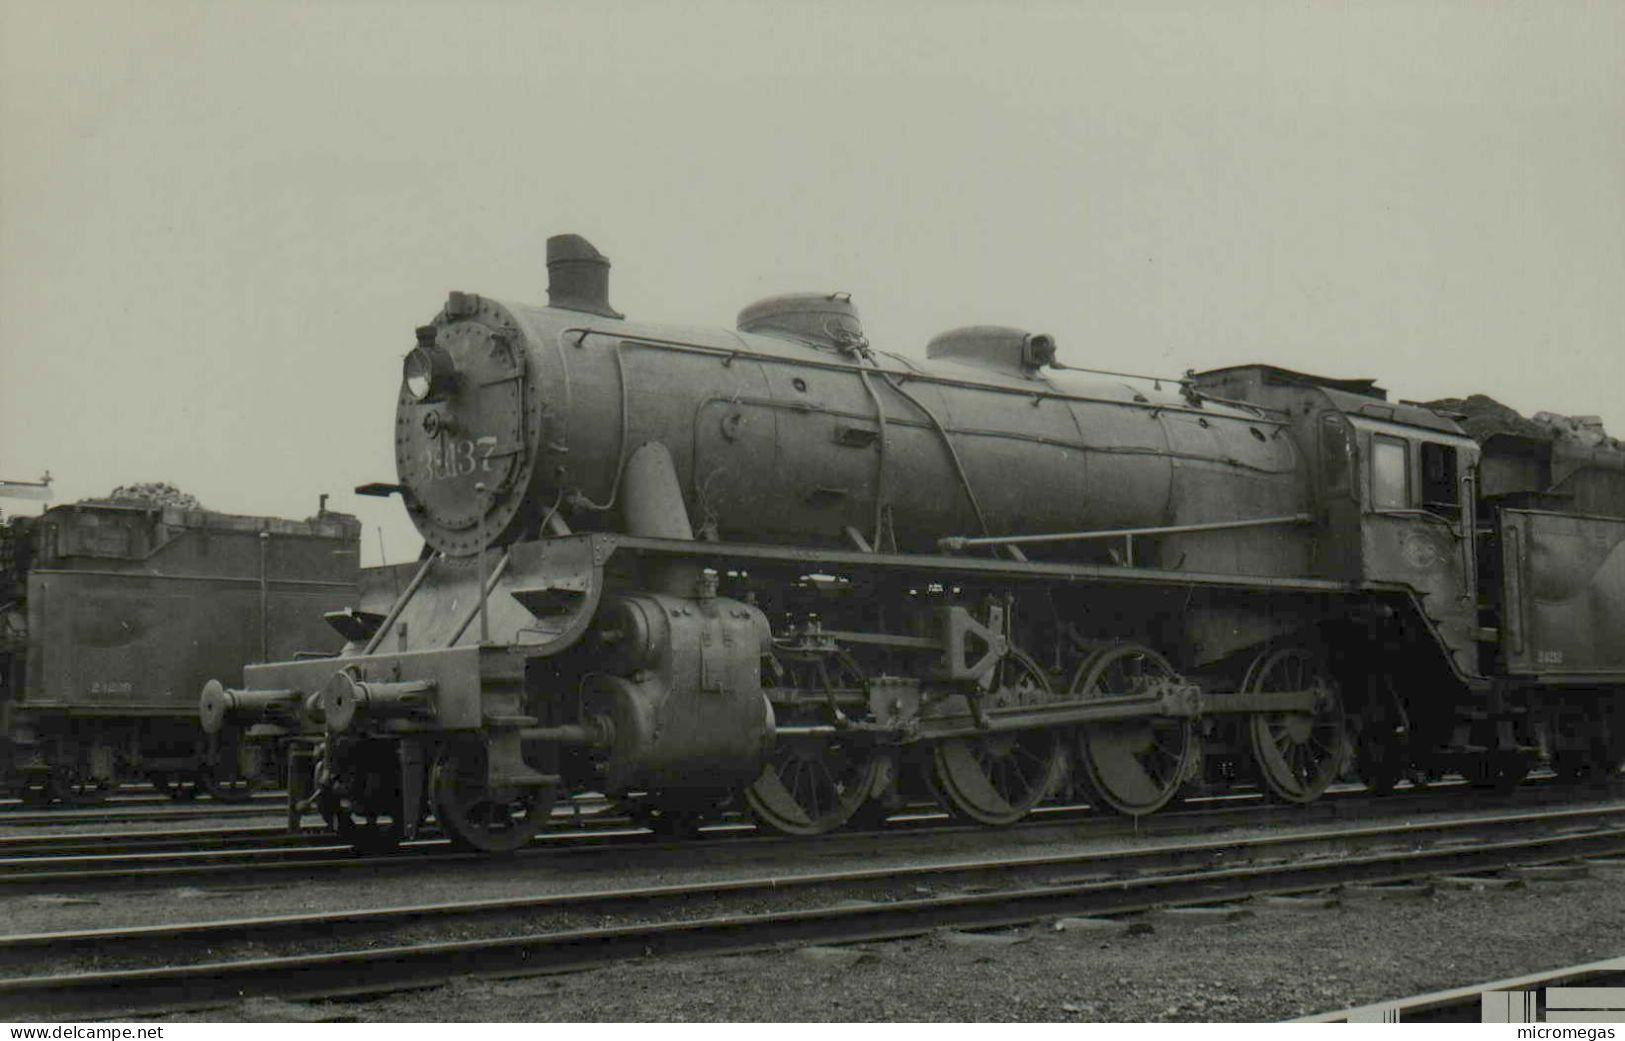 Locomotive 38-137 - Cliché J. Renaud - Treni